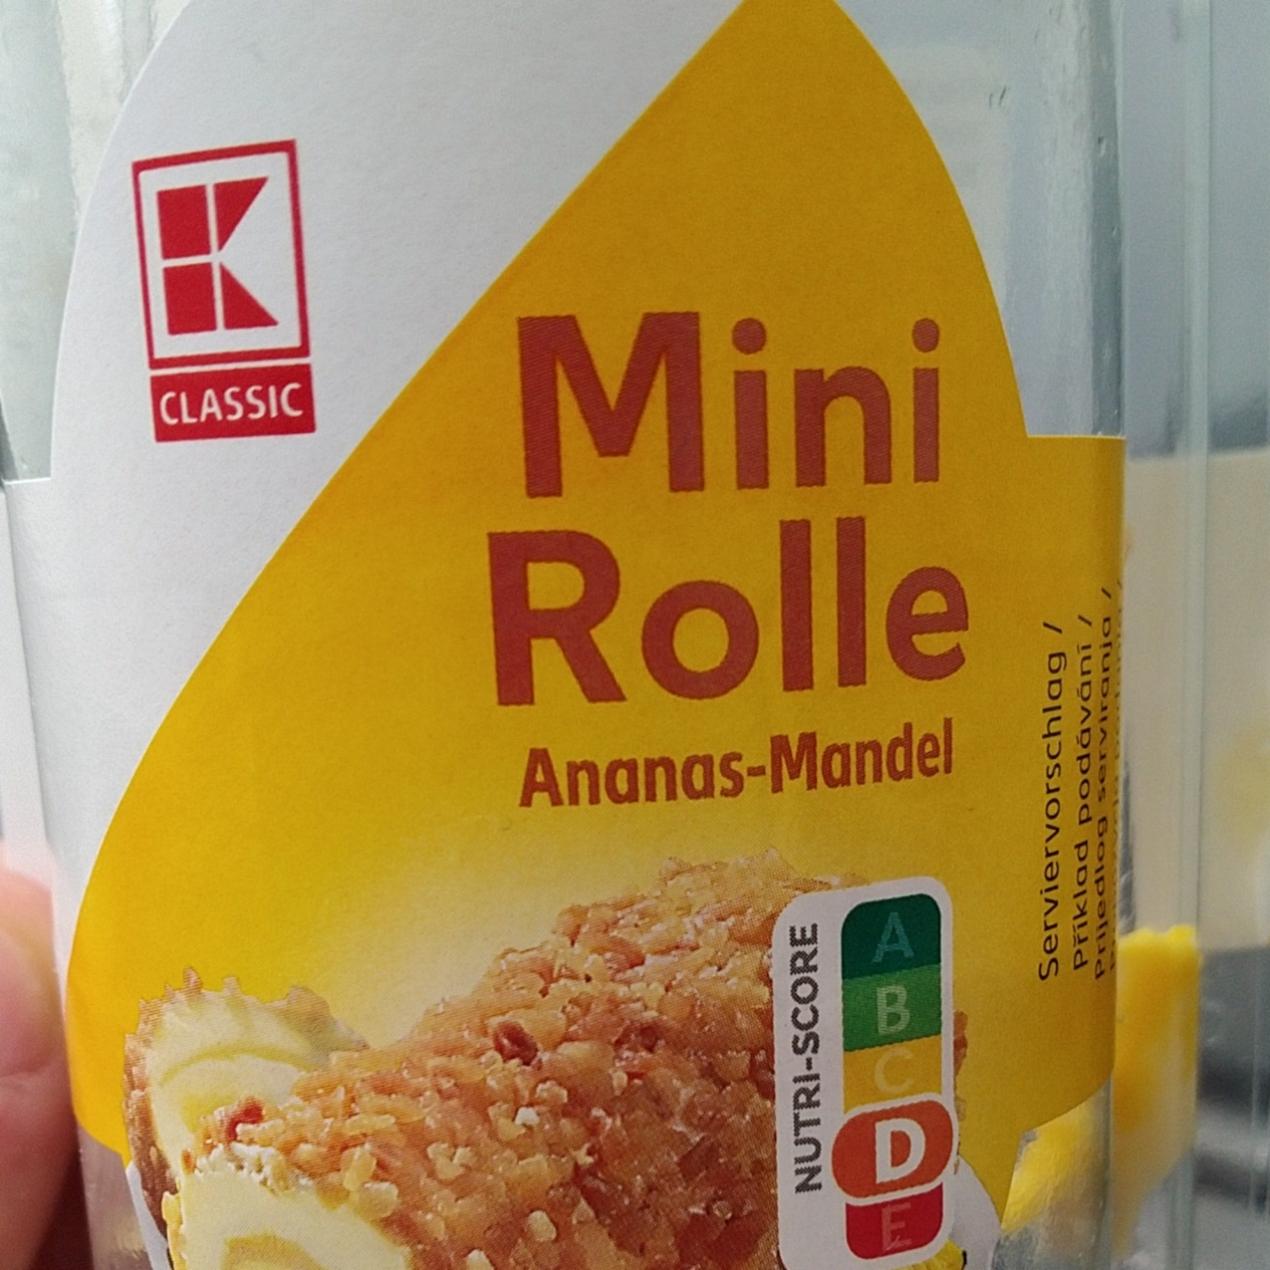 Фото - плавленный сыр с ананасом и миндалём Mini Rolle K-Classic